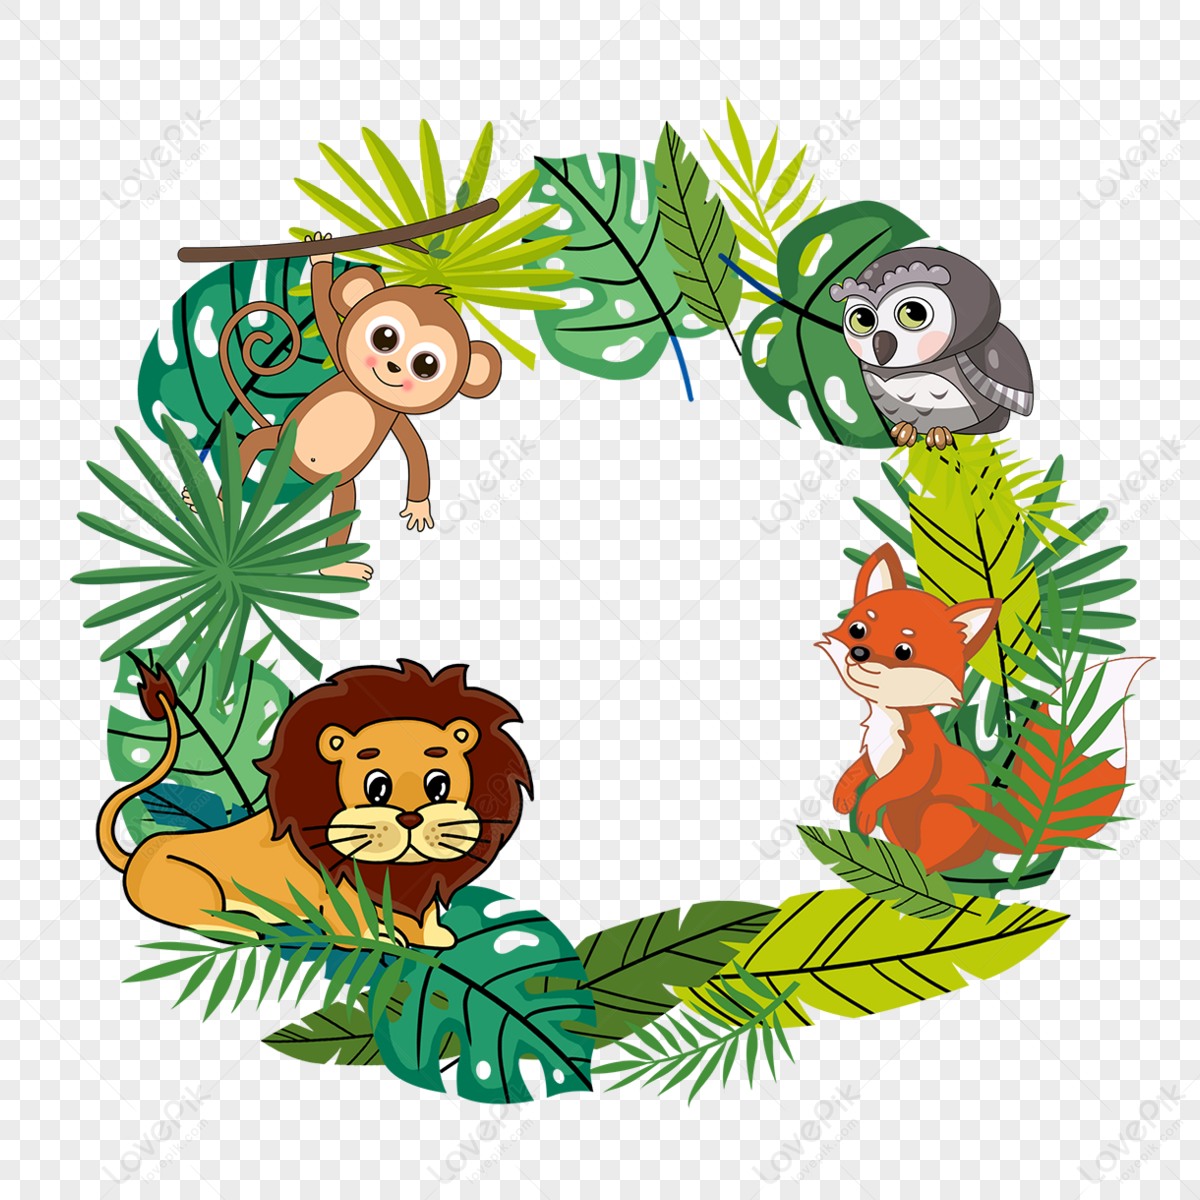 Cartoon jungle lion fox monkey animal border element,jungle animals,leaf png transparent background